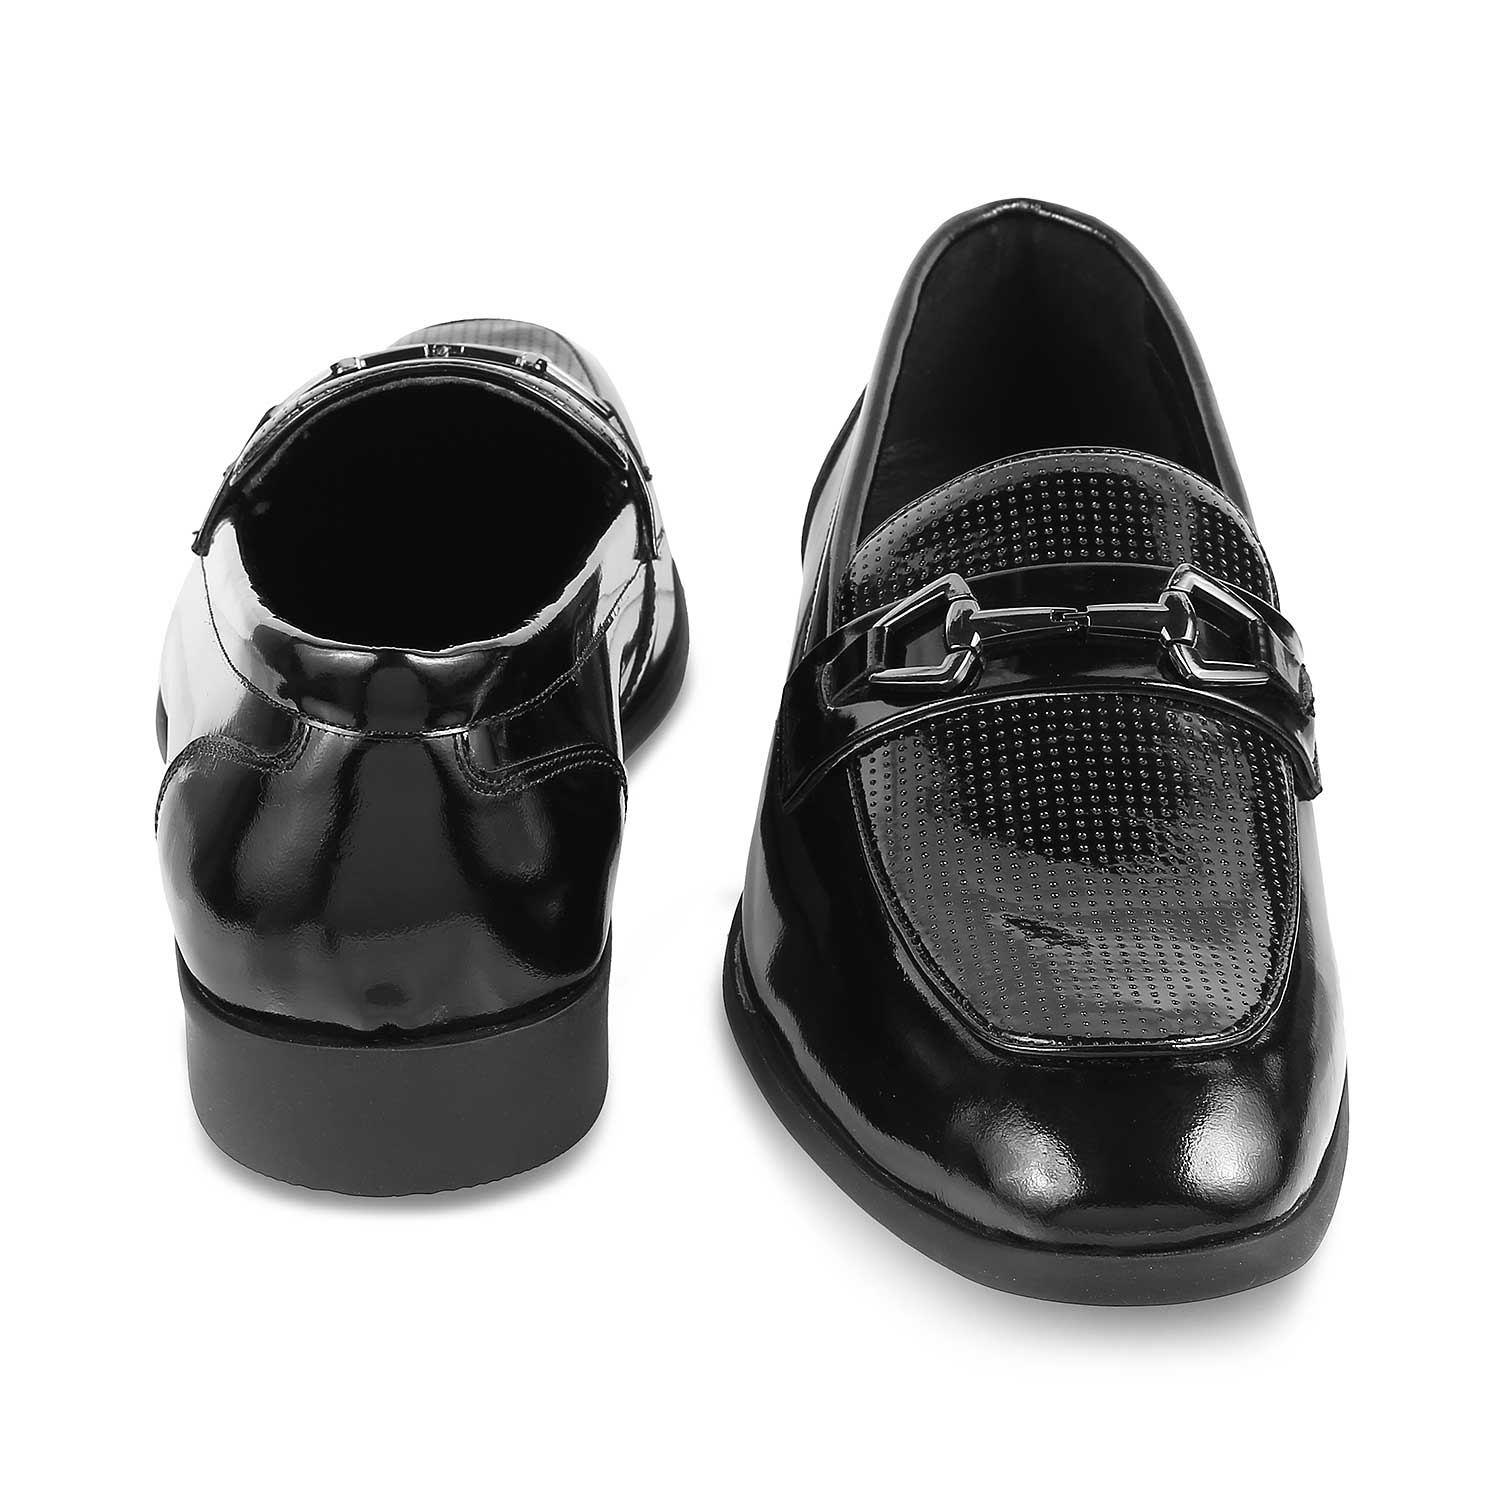 The Obama Black Men's Leather Loafers Tresmode - Tresmode